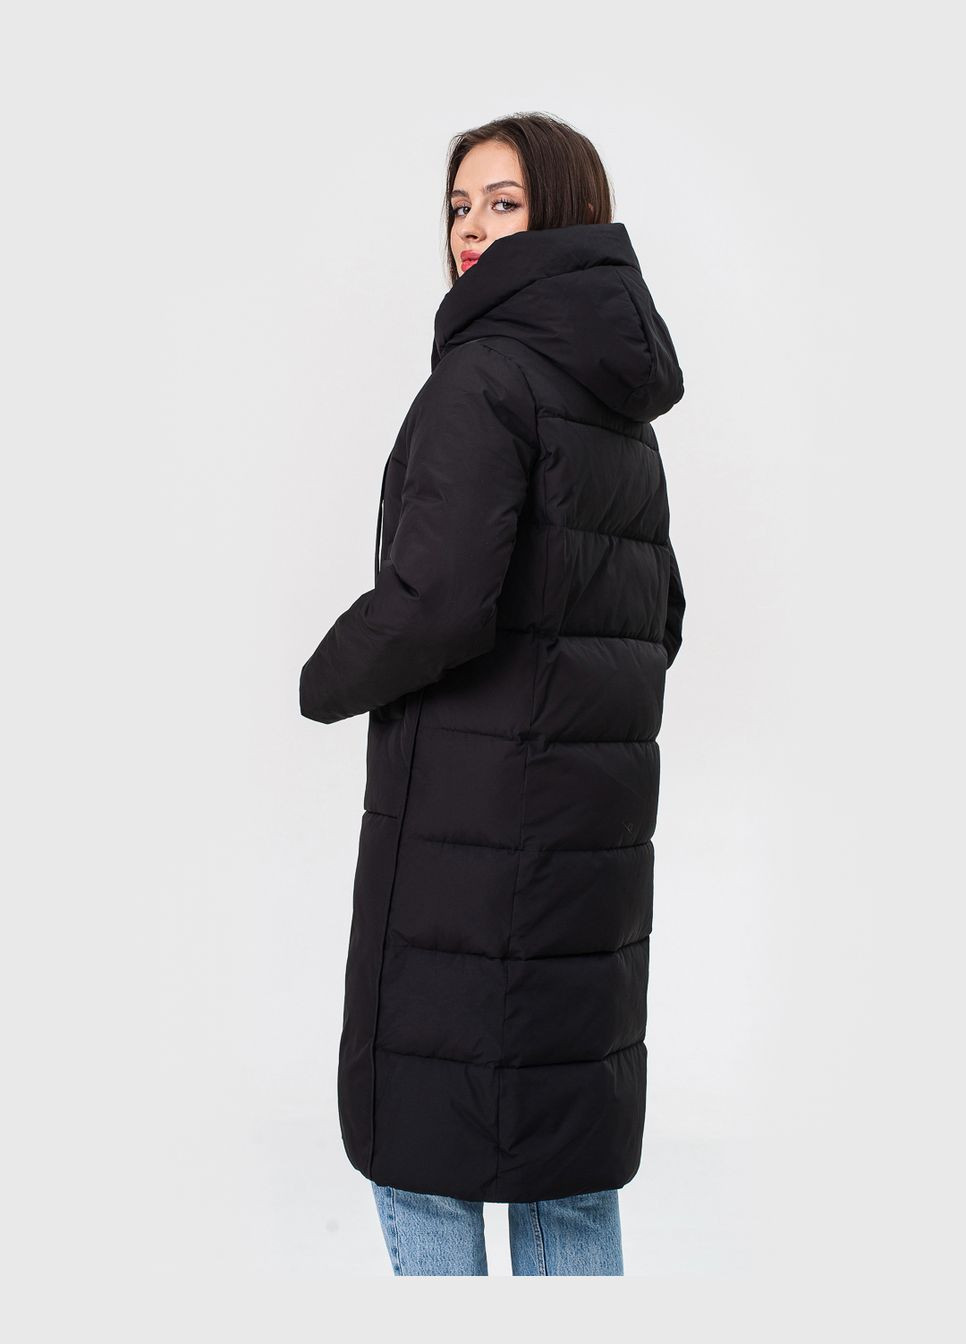 Чорна зимня базова куртка-пальто з капюшоном модель Icebear 790